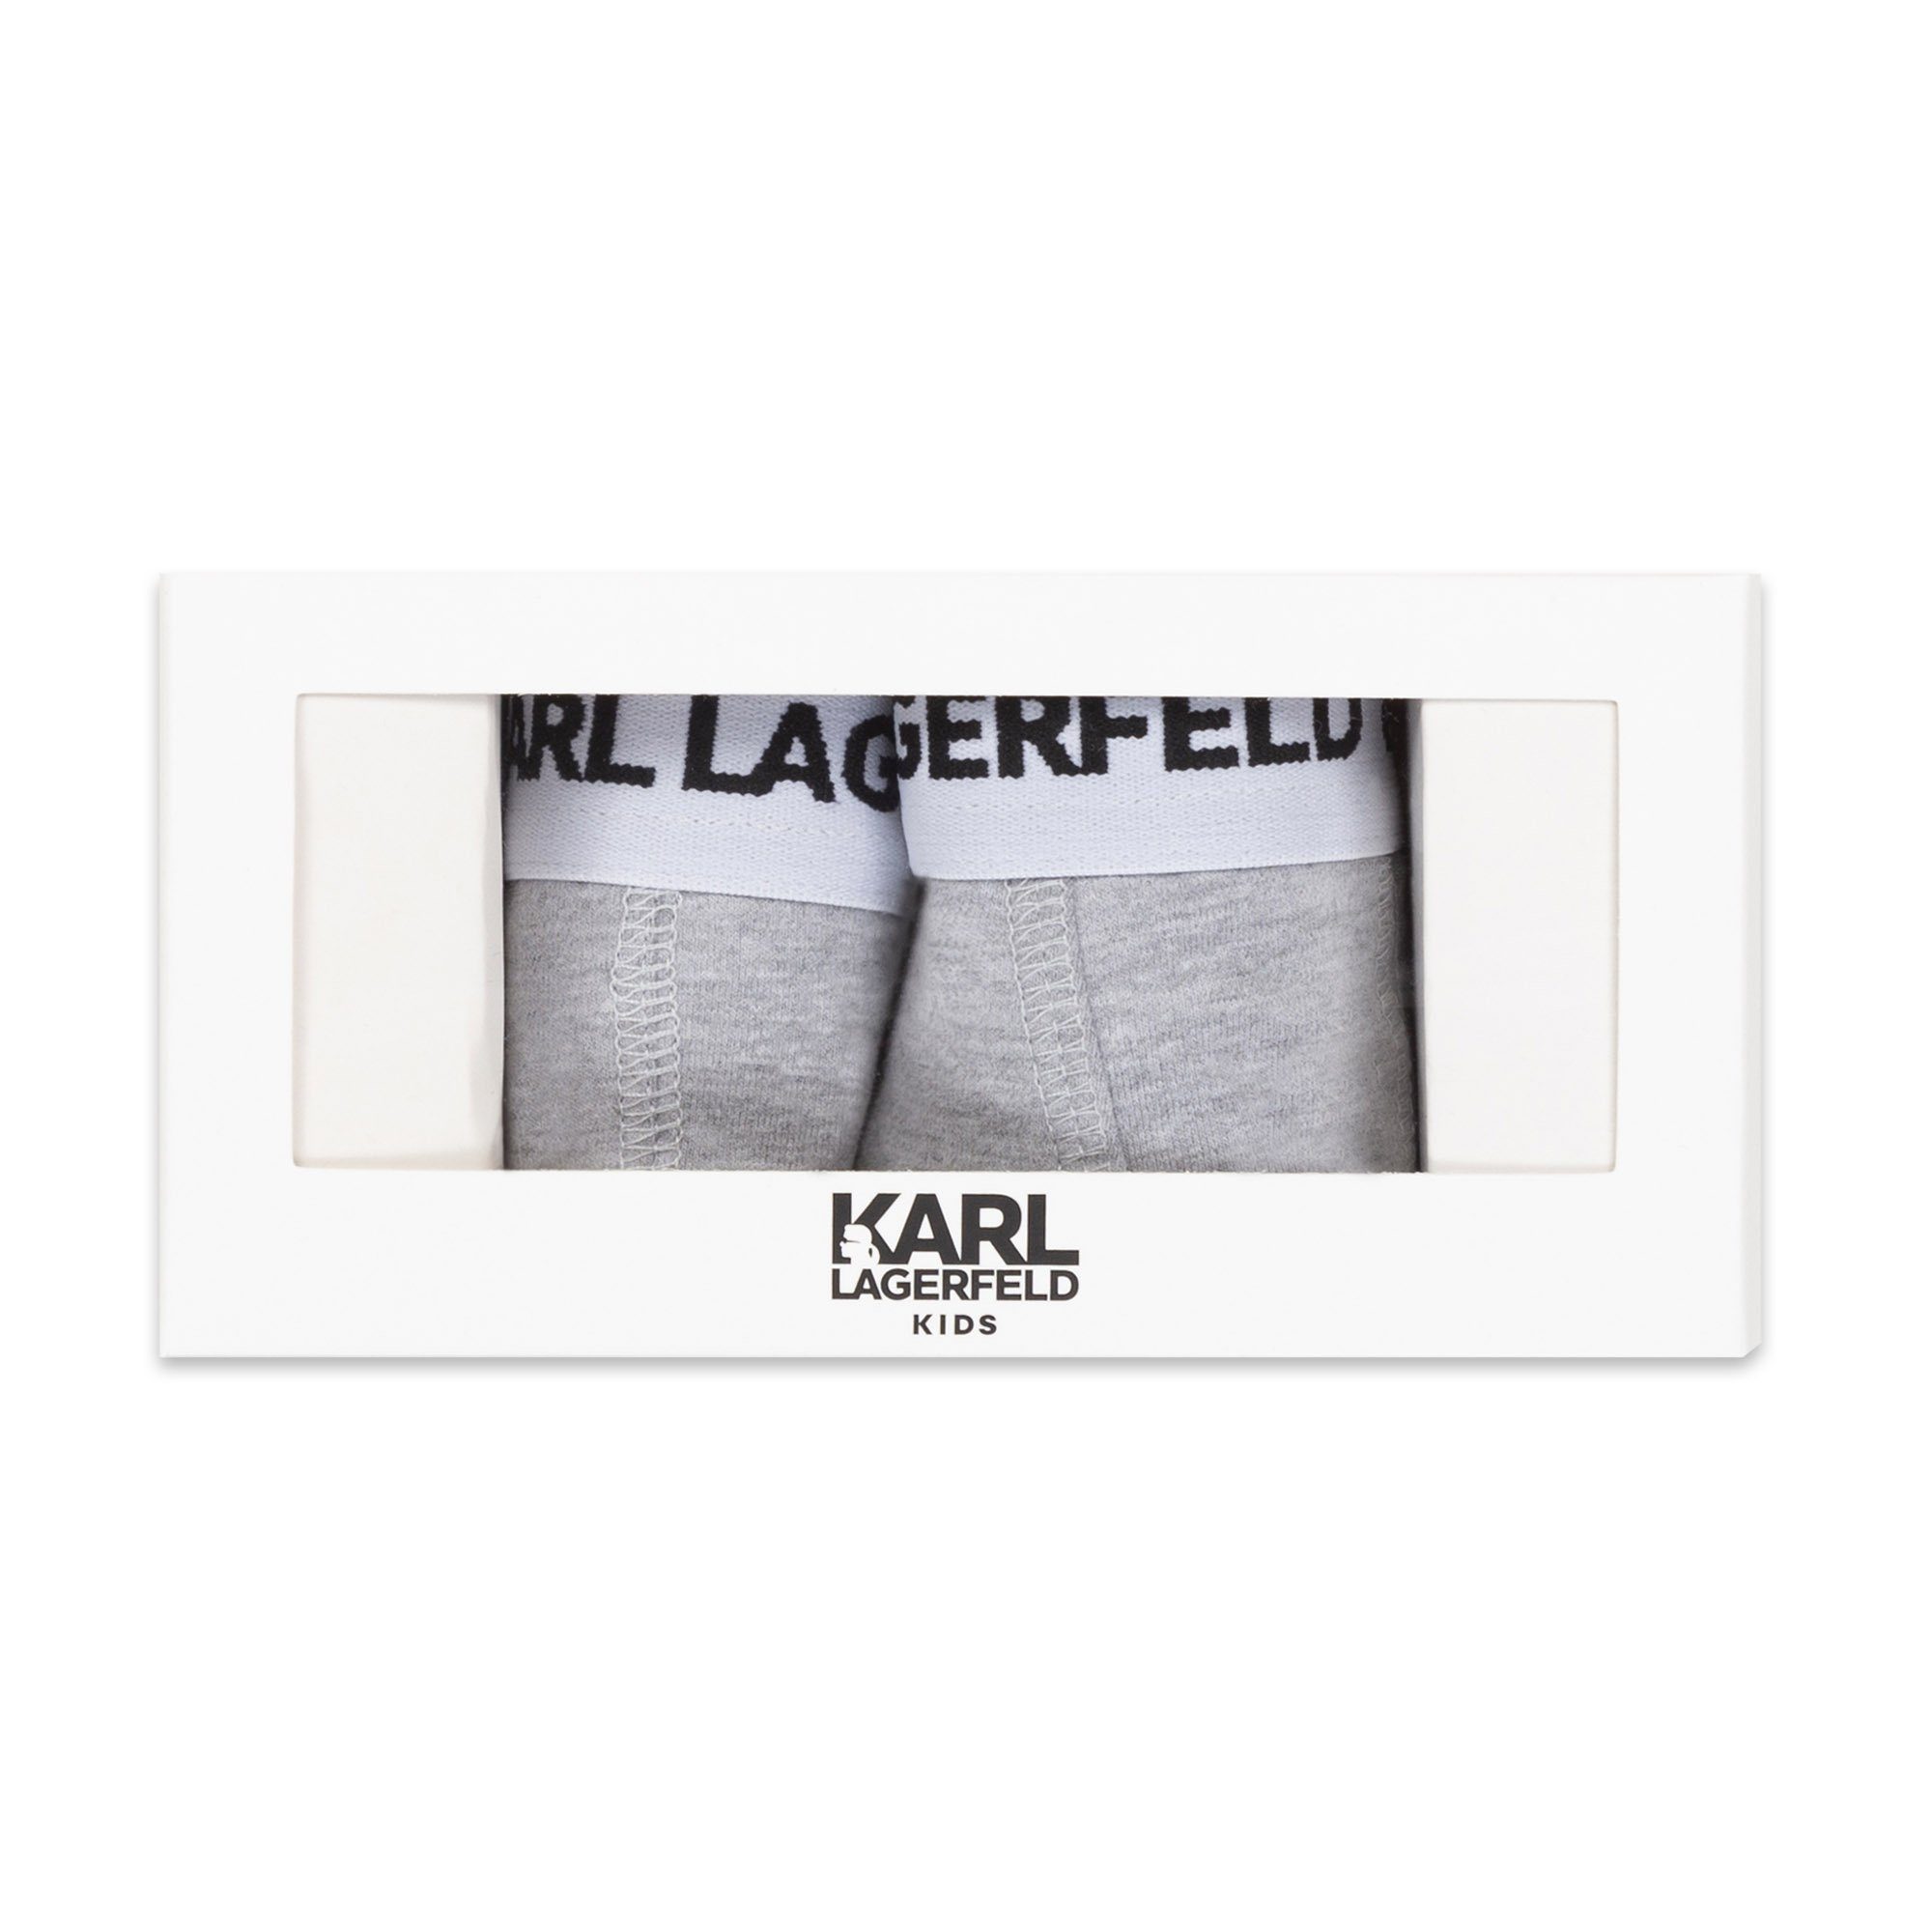 KARL LAGERFELD Boxershorts 2er Trunks Karl grau Logo Lagerfeld Set Boxershorts